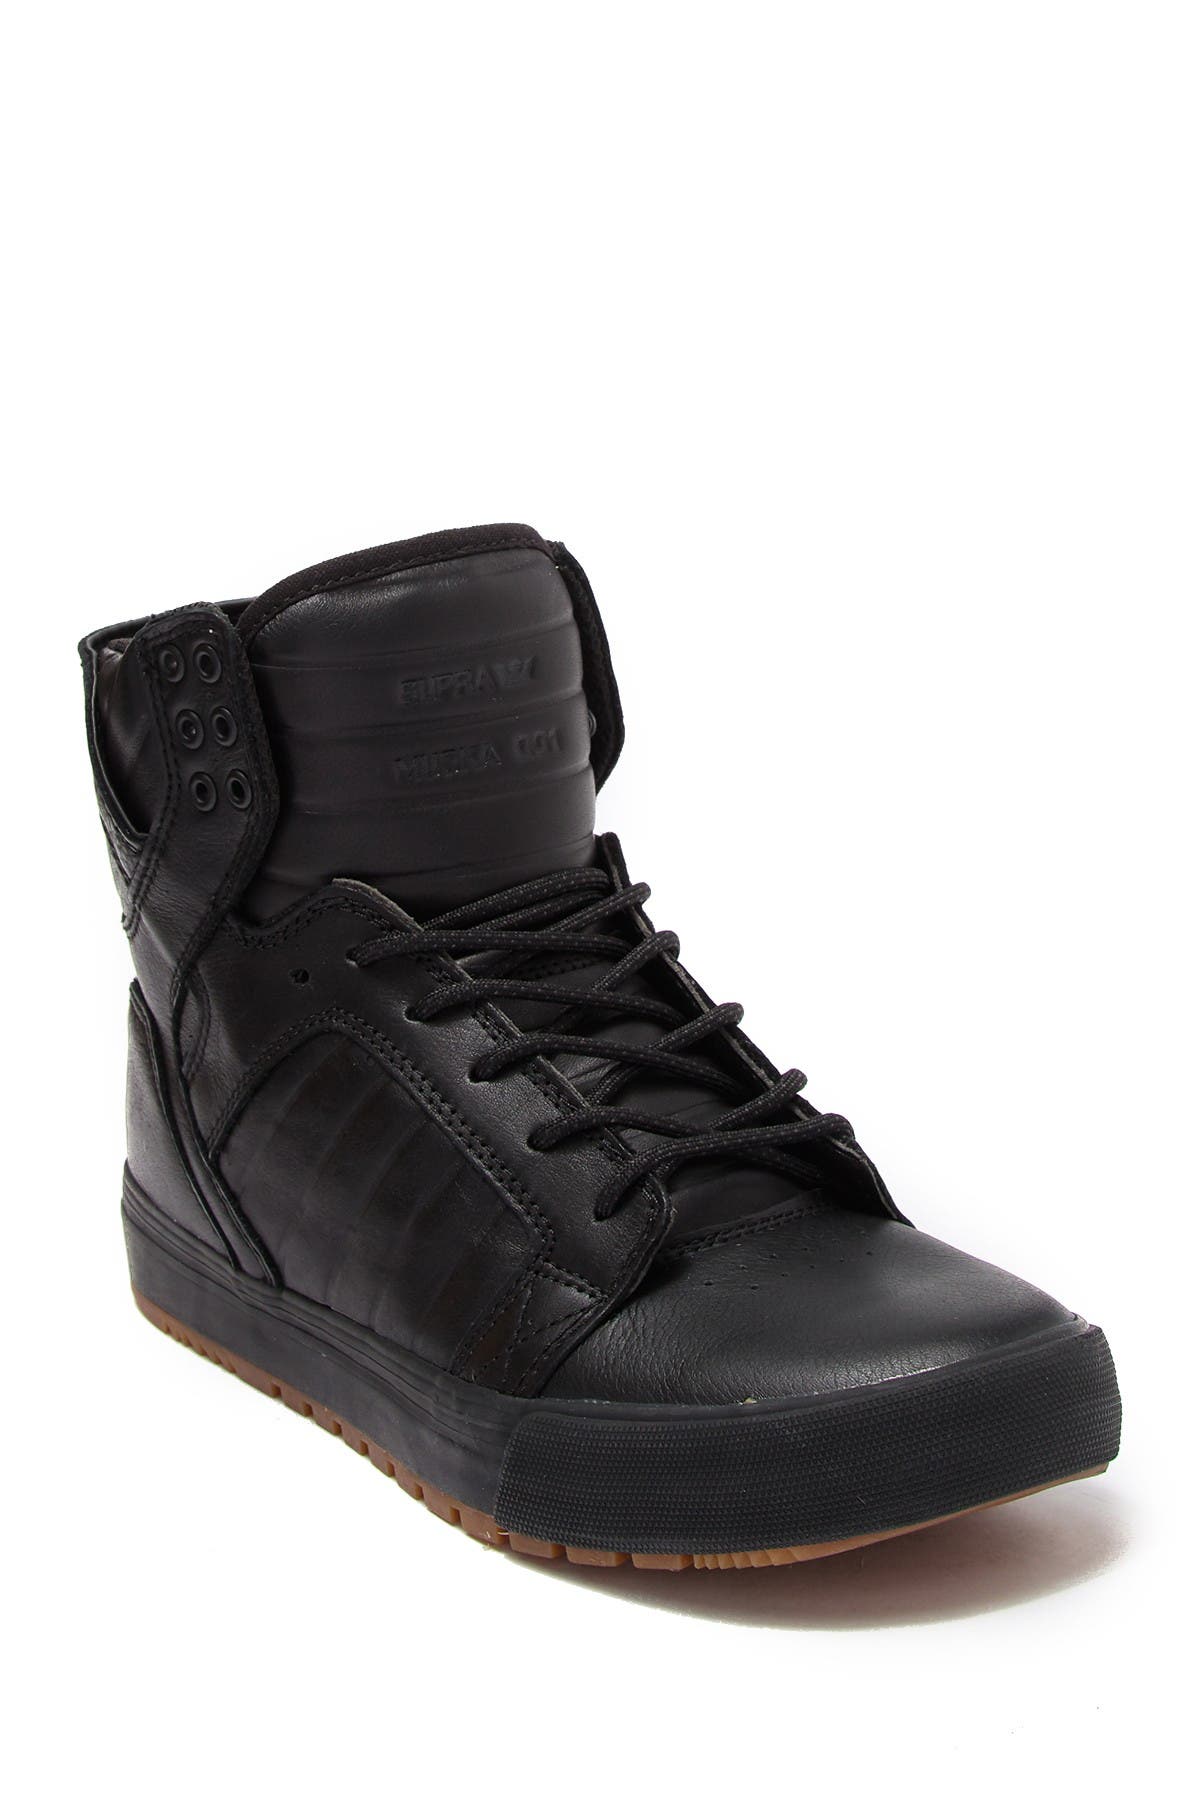 Supra | Skytop Leather Sneaker 